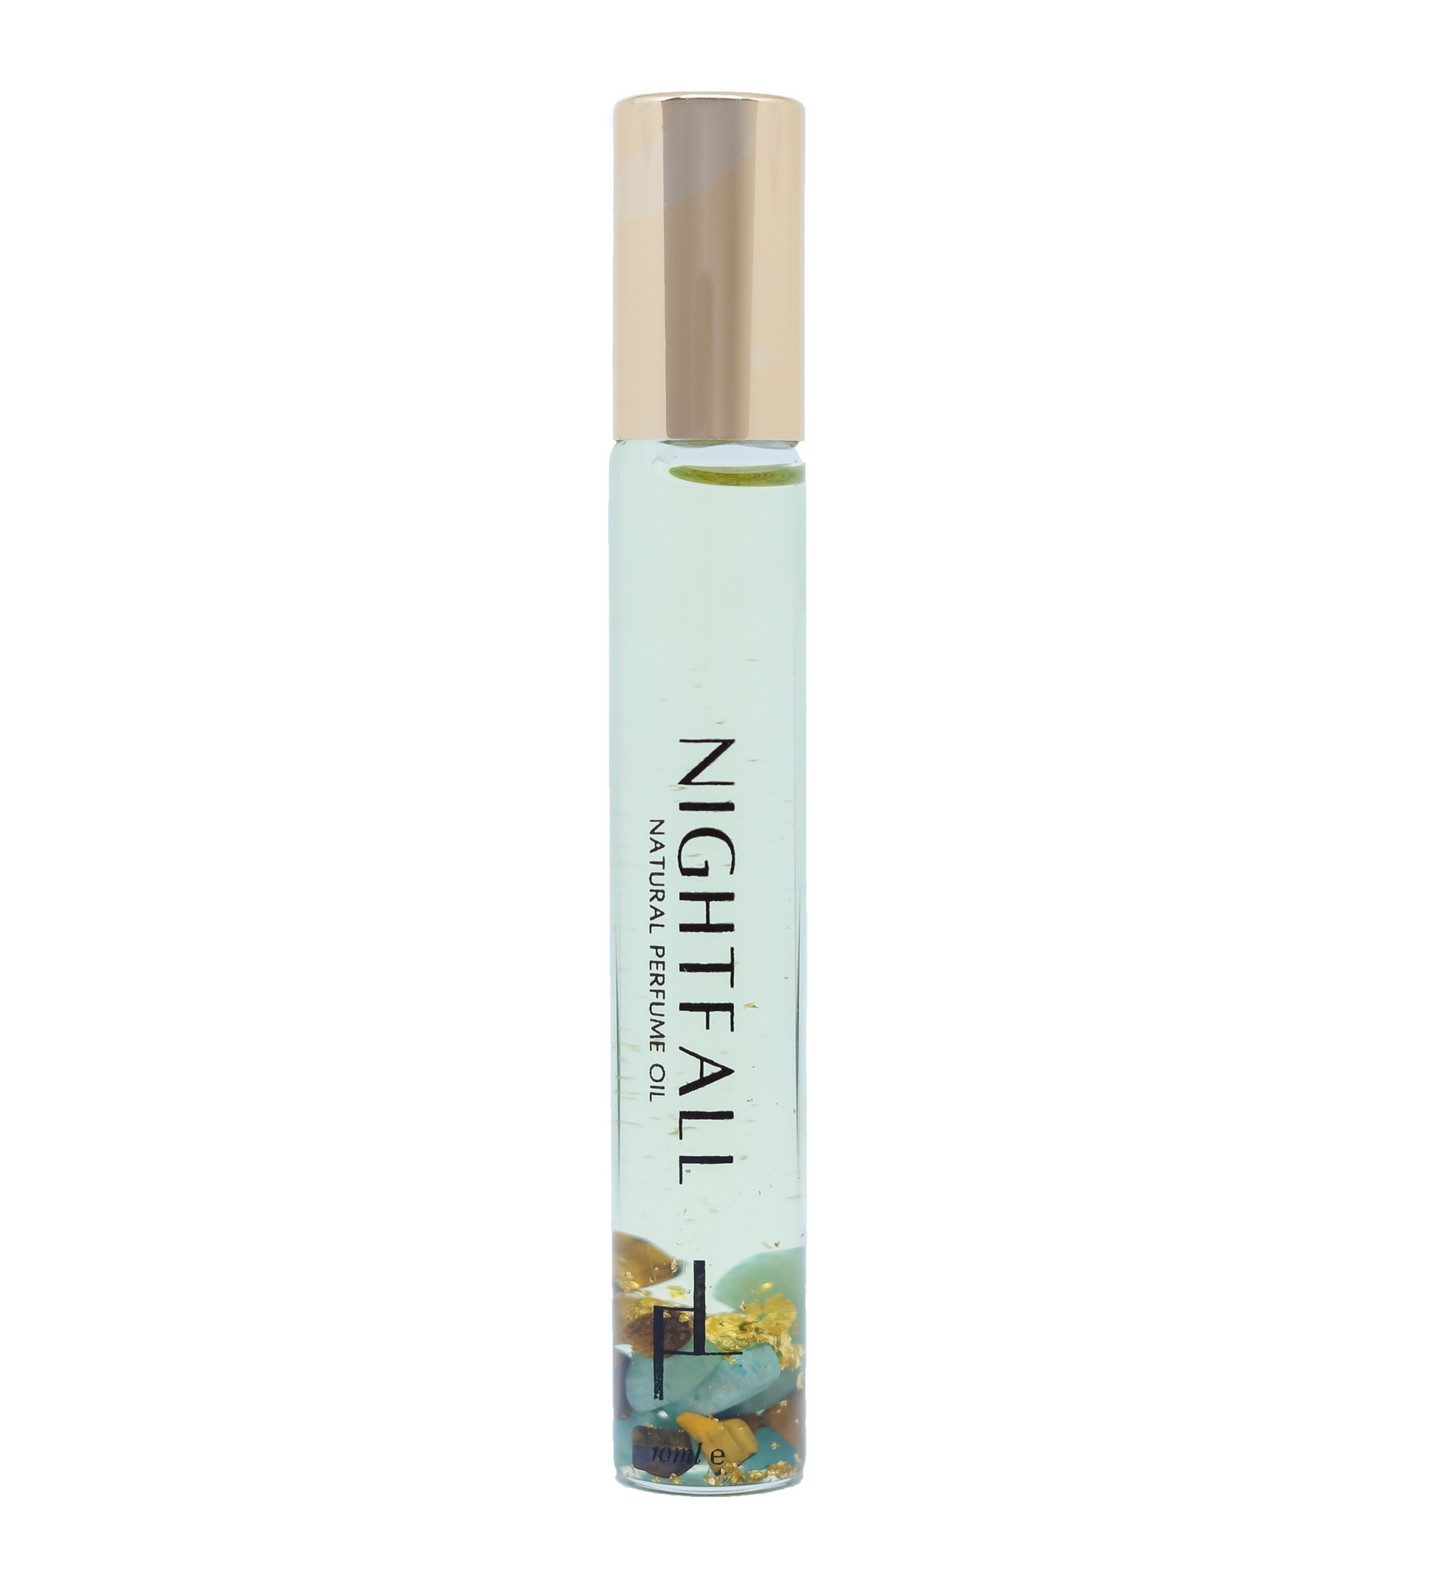 NIGHTFALL Natural Perfume Oil